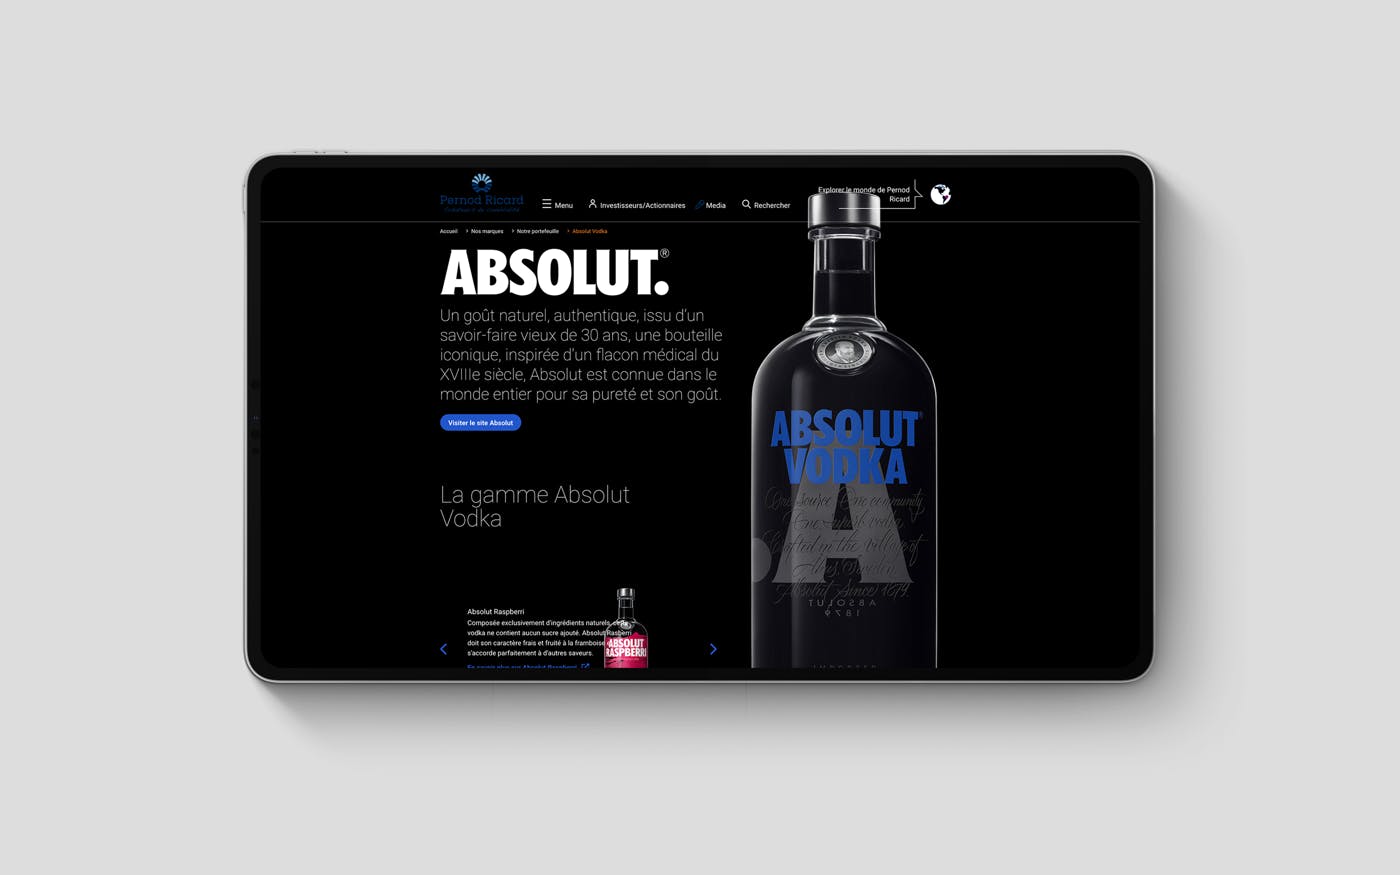 Pernod Ricard — Official Website
